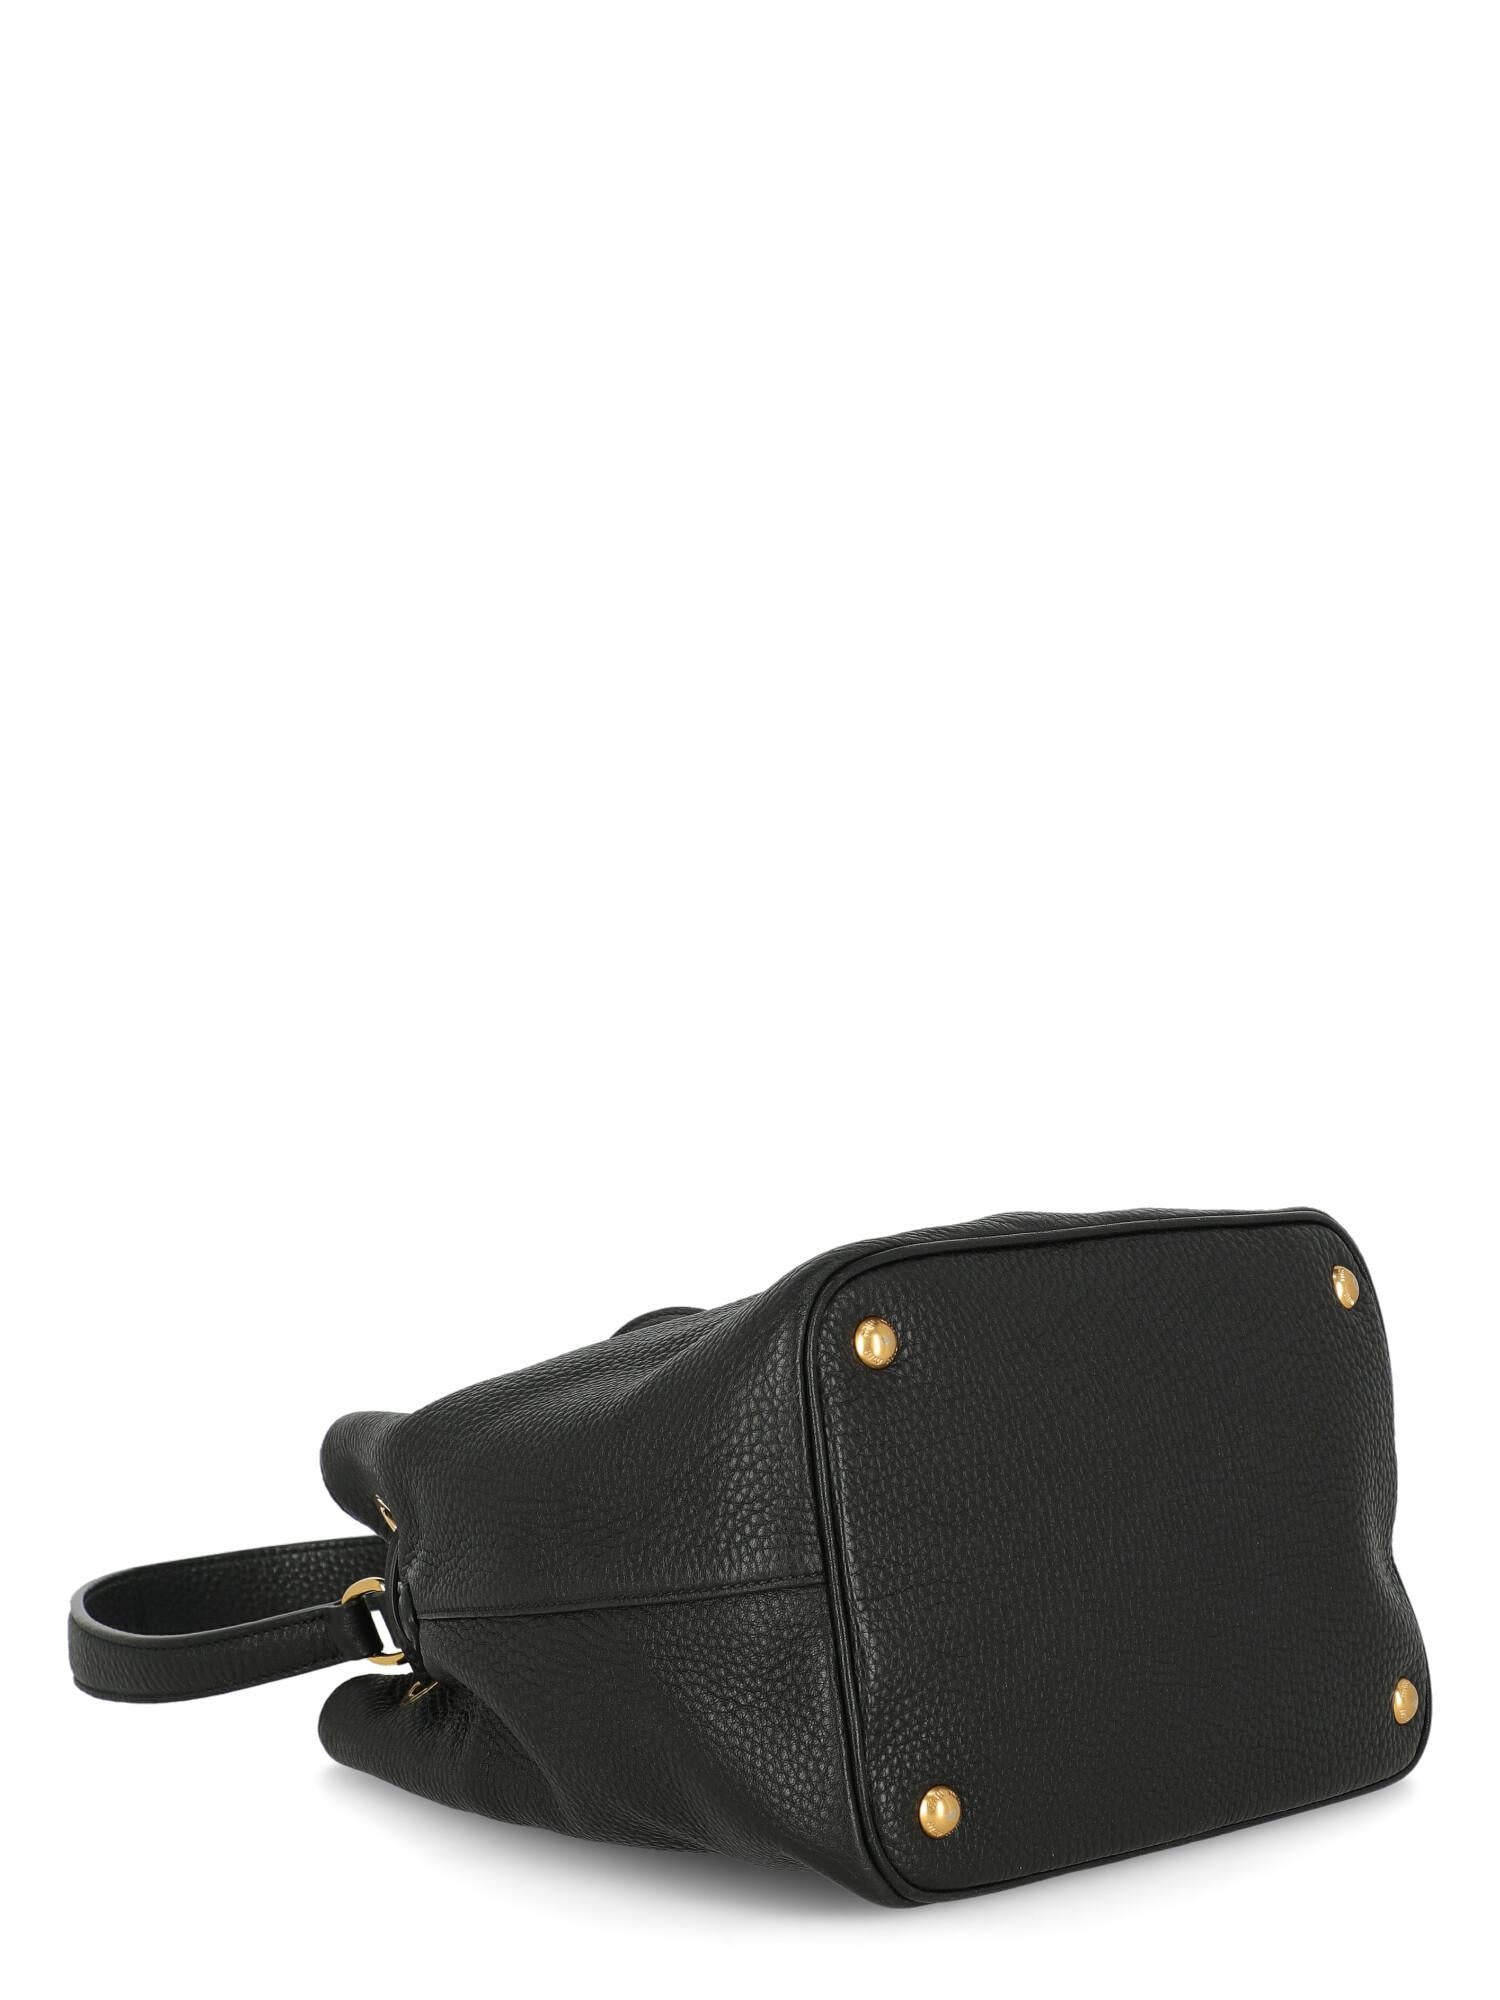 Miu Miu  Women   Shoulder bags   Black Leather  For Sale 1